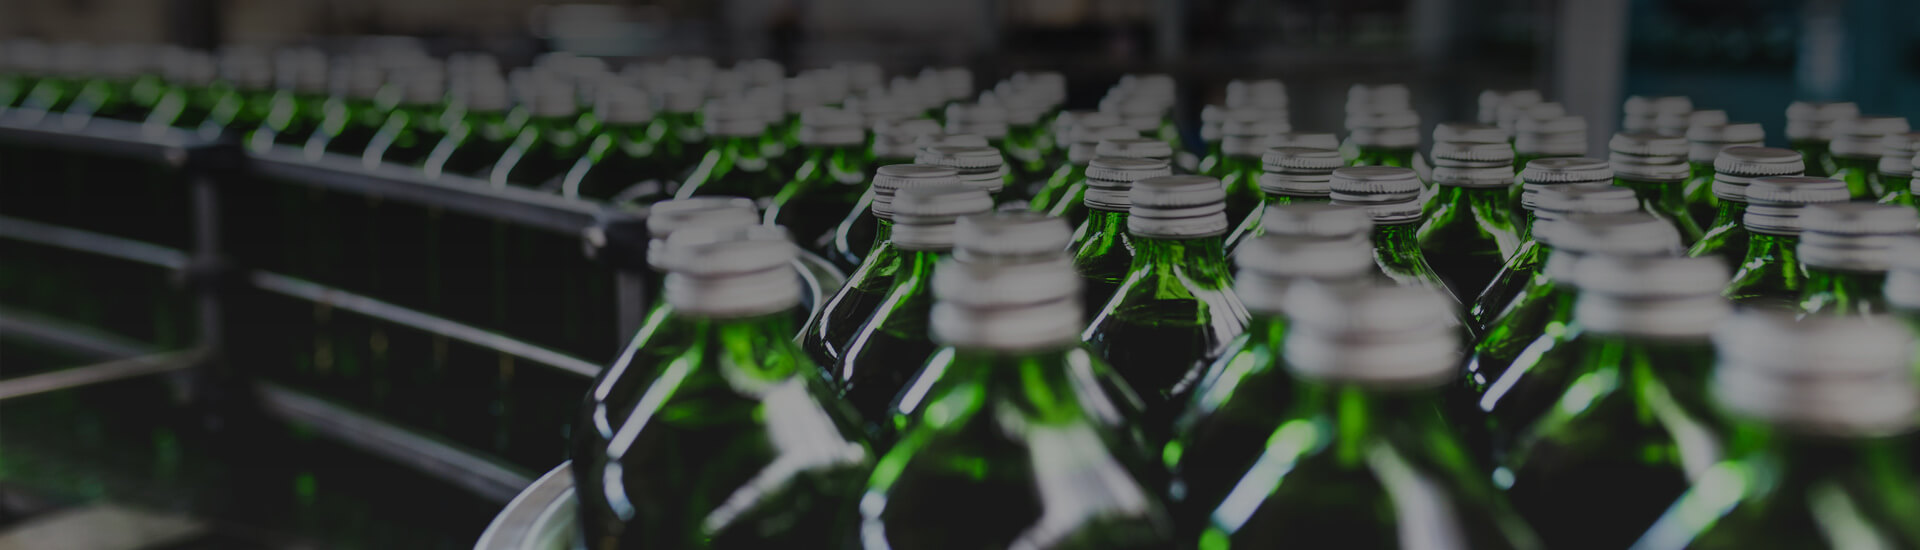 Photo of green bottles during manufacturing